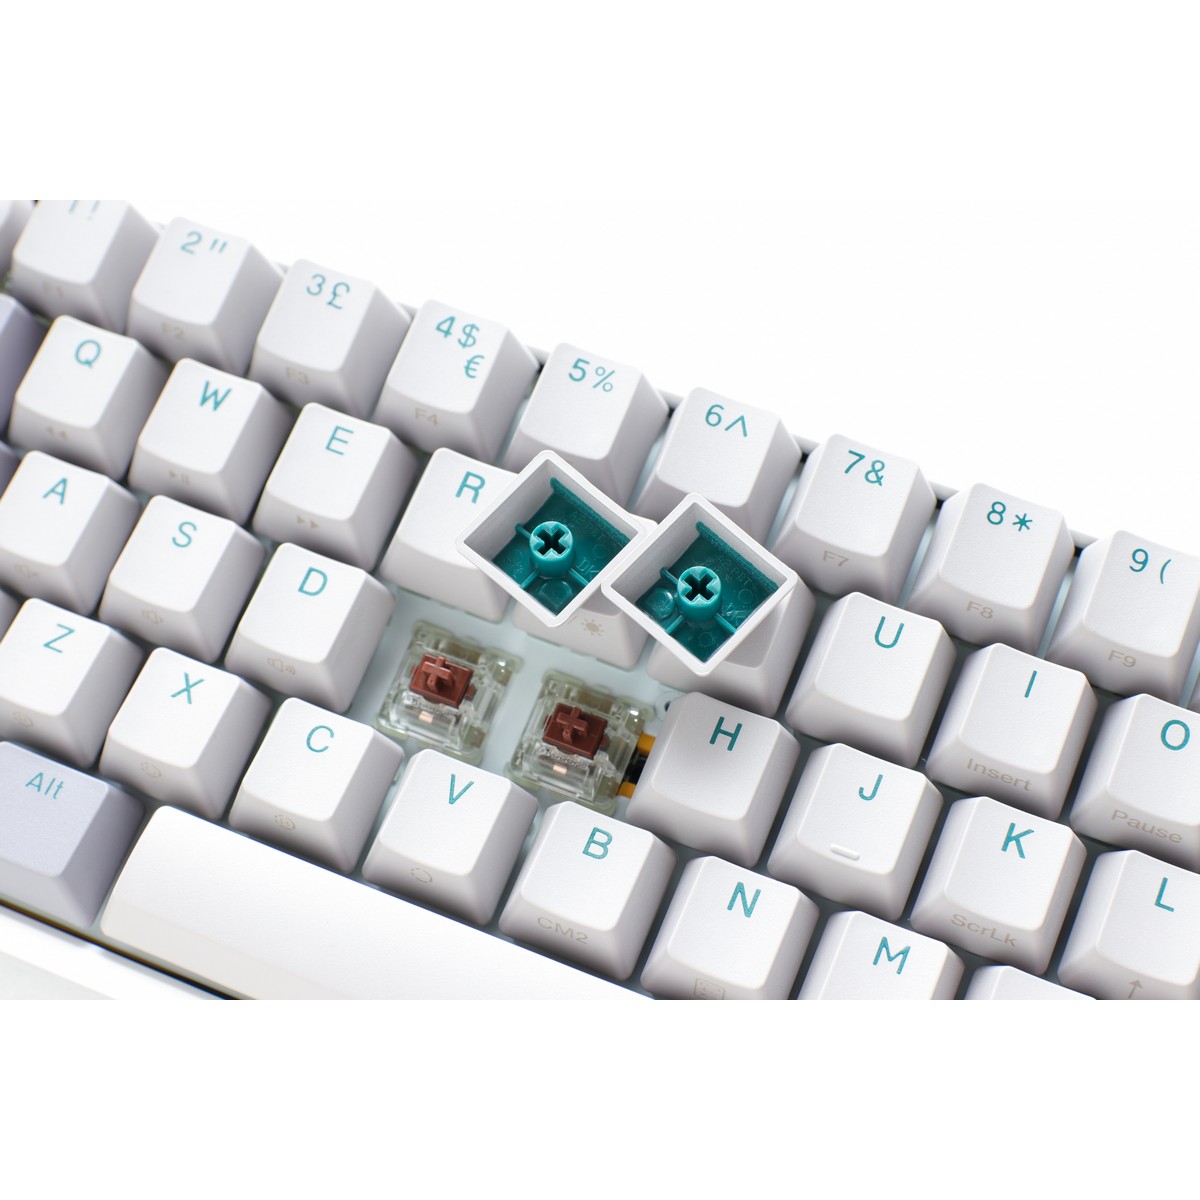 Ducky - Ducky One 3 Mist Mini 60% USB RGB Mechanical Gaming Keyboard Cherry MX Speed Silver Switch - UK Layout